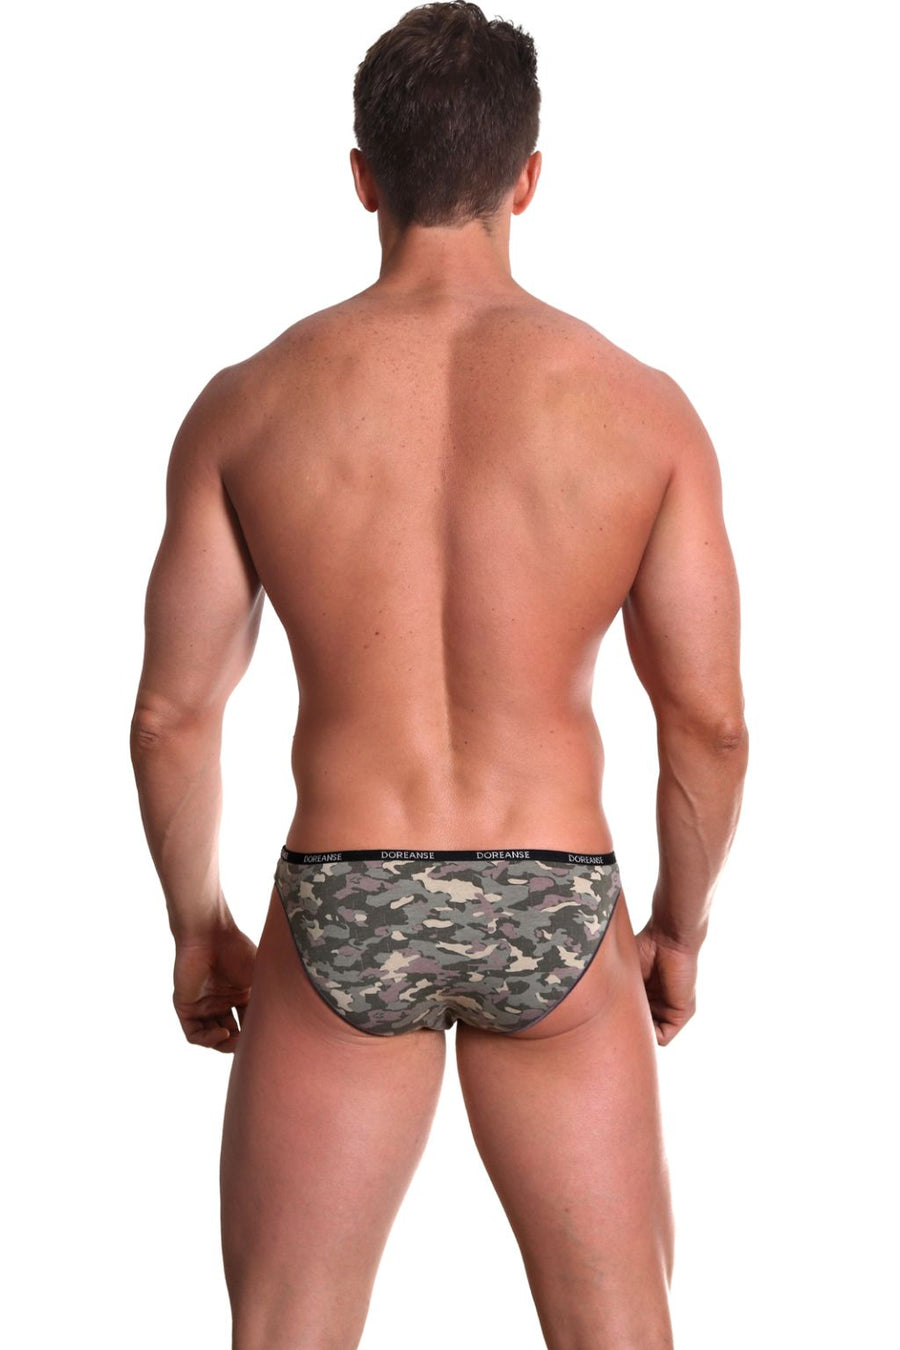 Doreanse Mens Pouch Bodysuit Athletic Underwear – Bodywear for Men